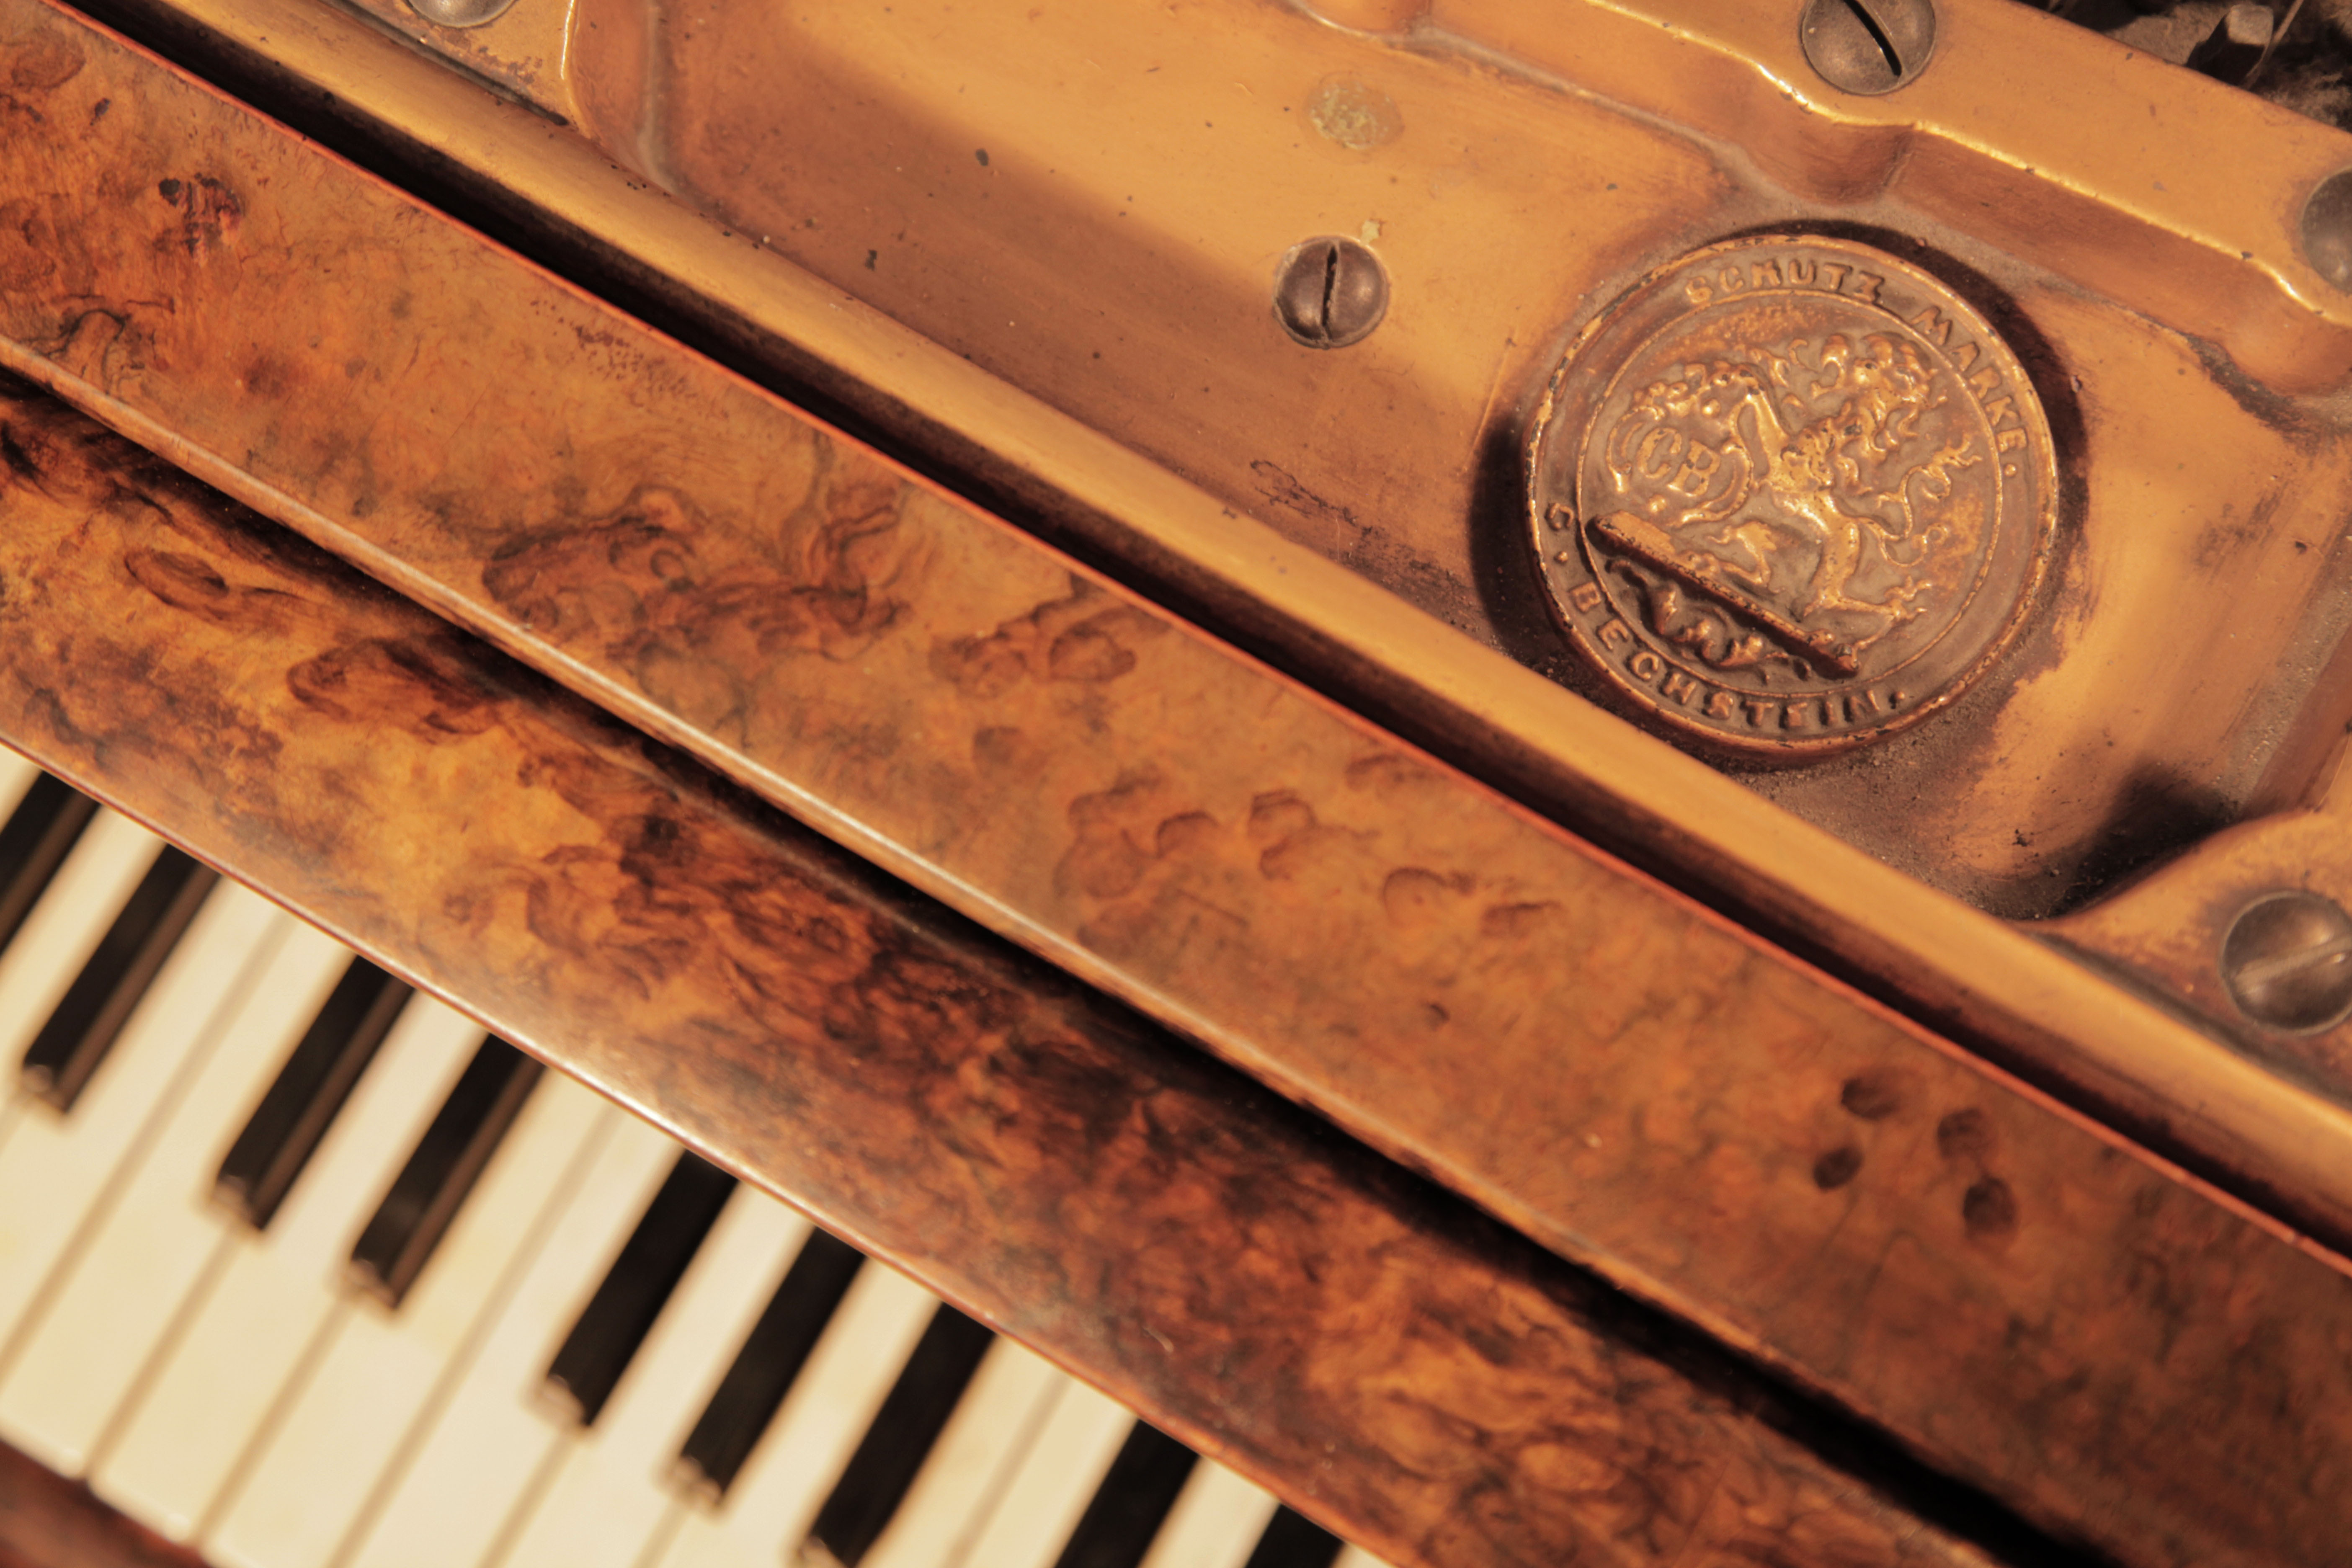 Bechstein  model V  Grand Piano for sale.